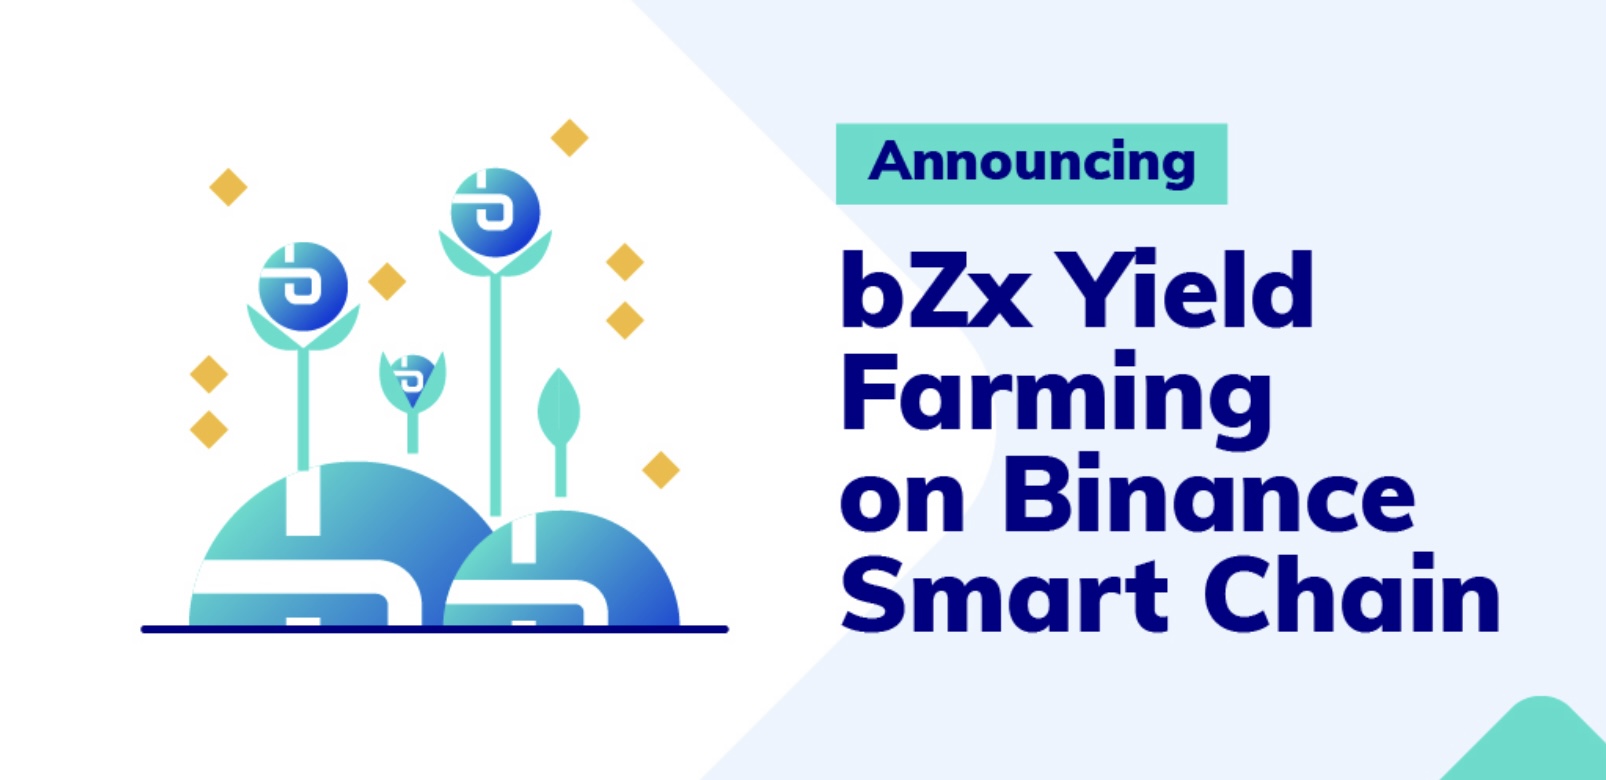 bZx Yield Farming on Binance Smart Chain